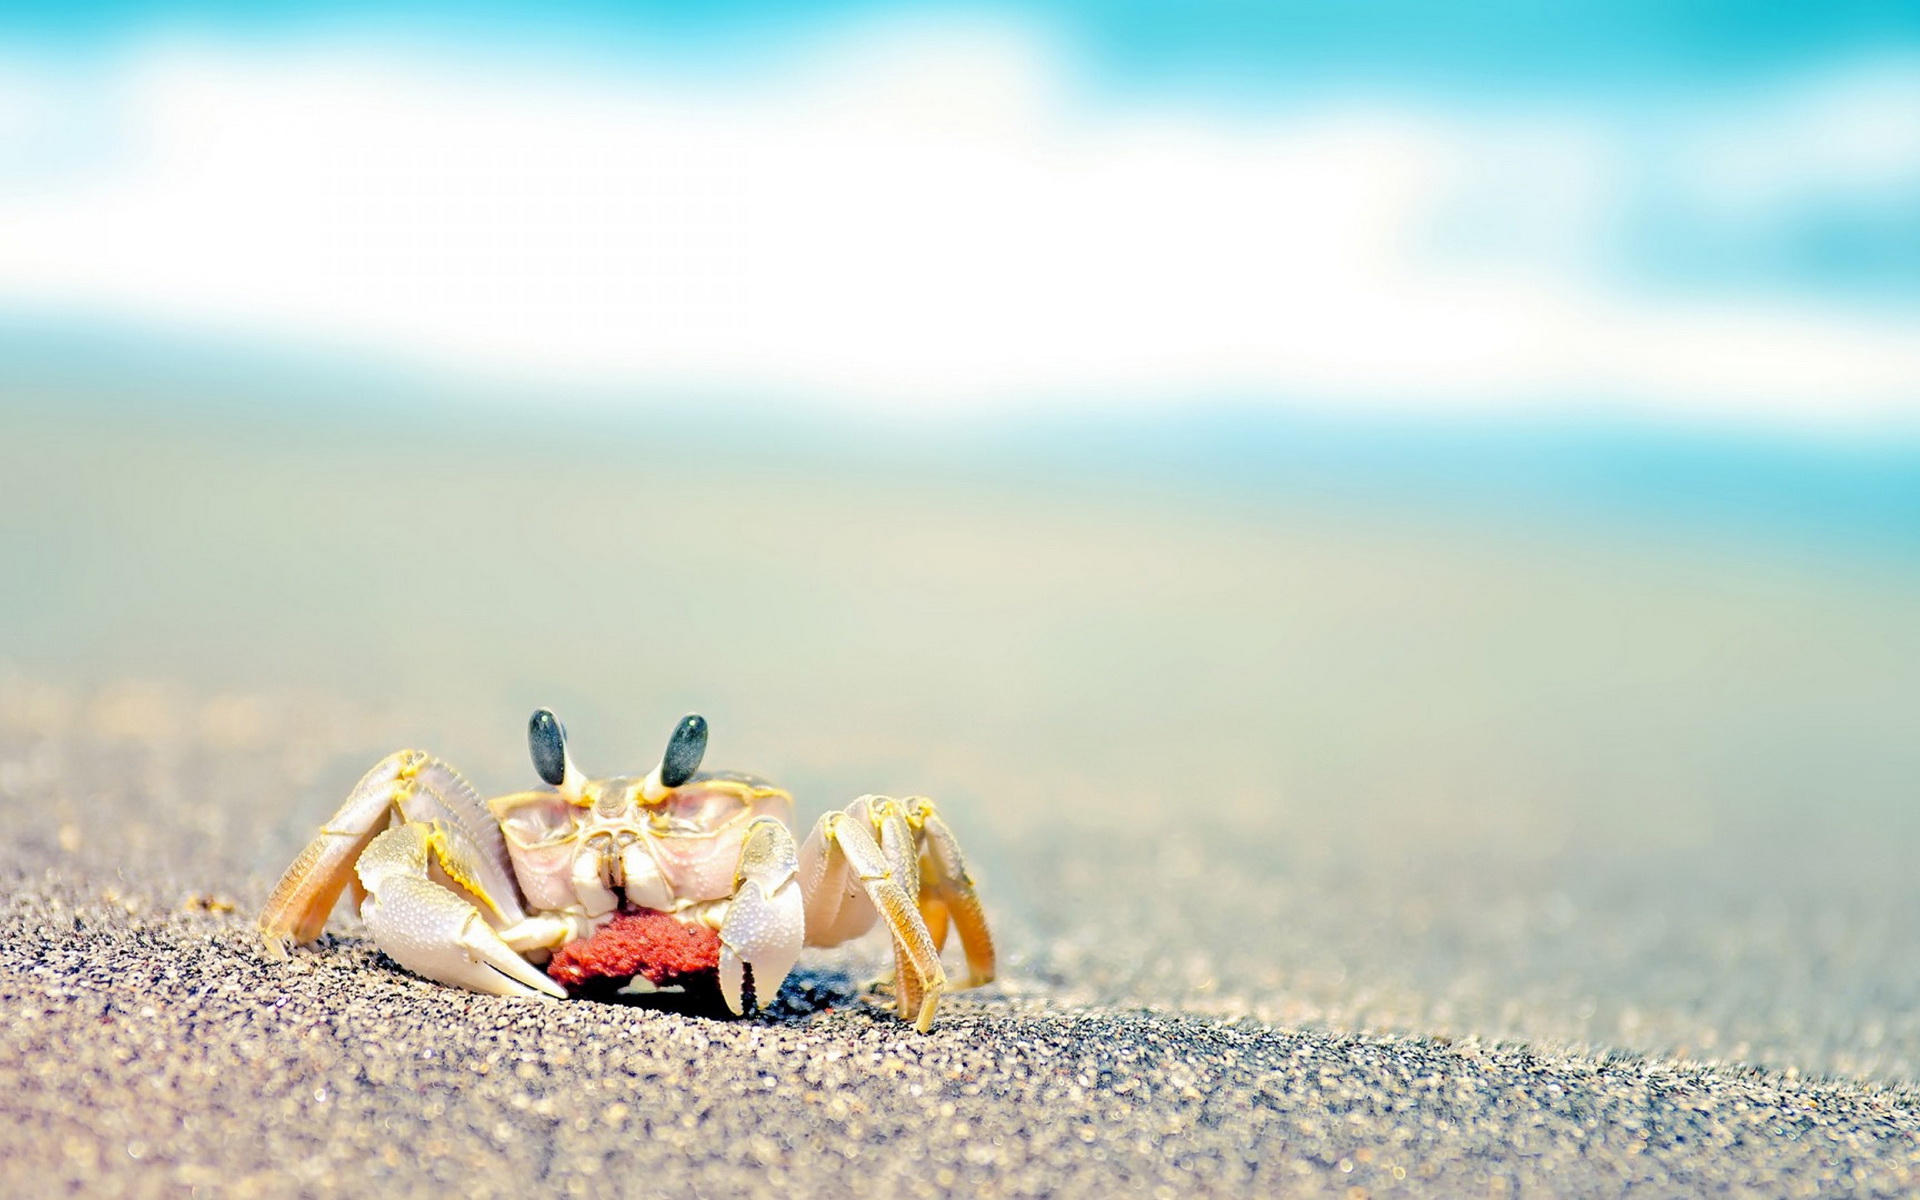  Crab Full HD Wallpaper